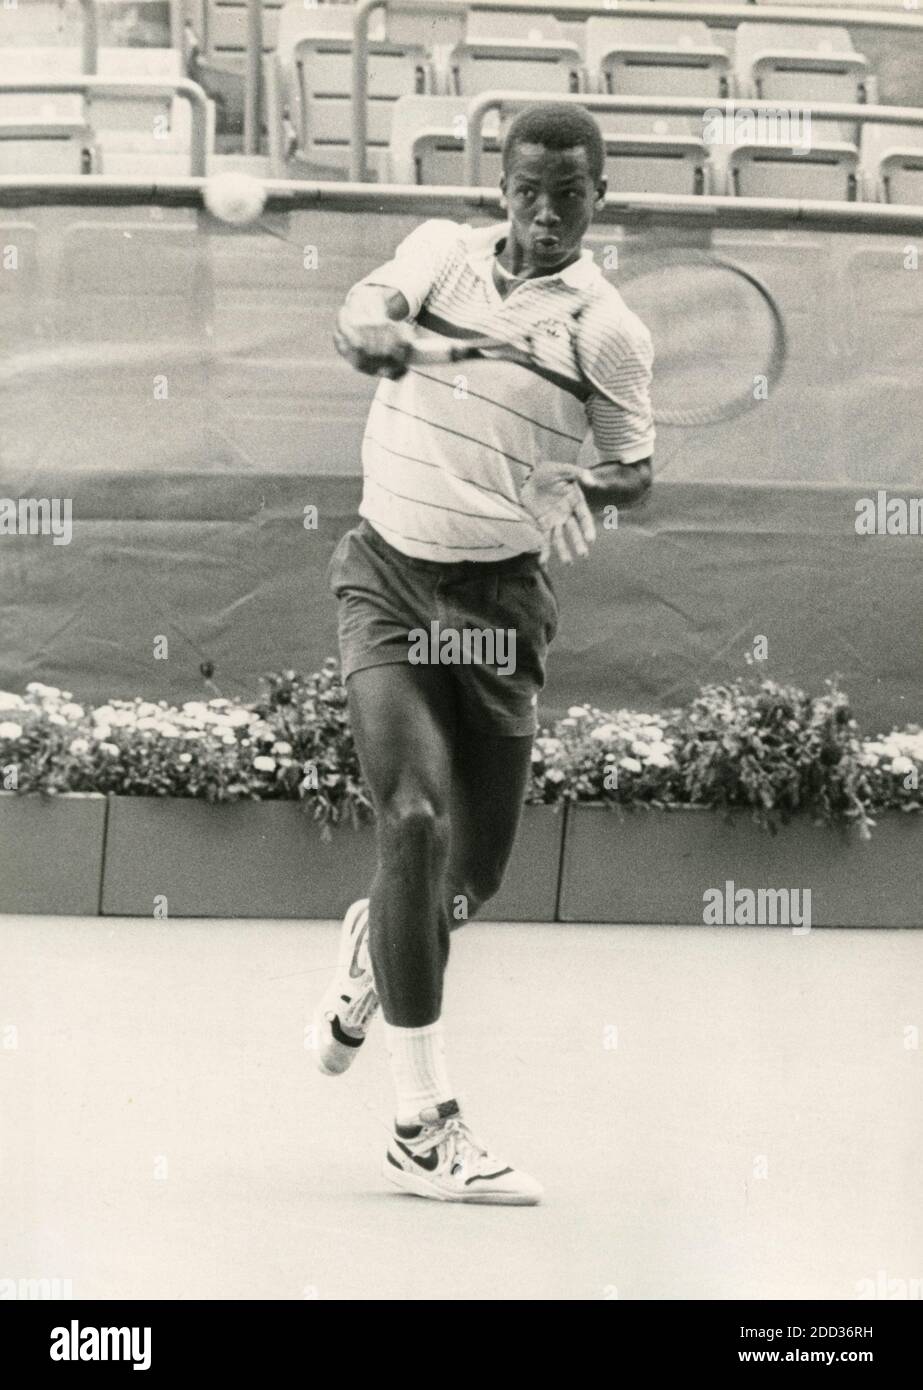 American tennis player Martin Blackman, US Open 1986 Stock Photo - Alamy